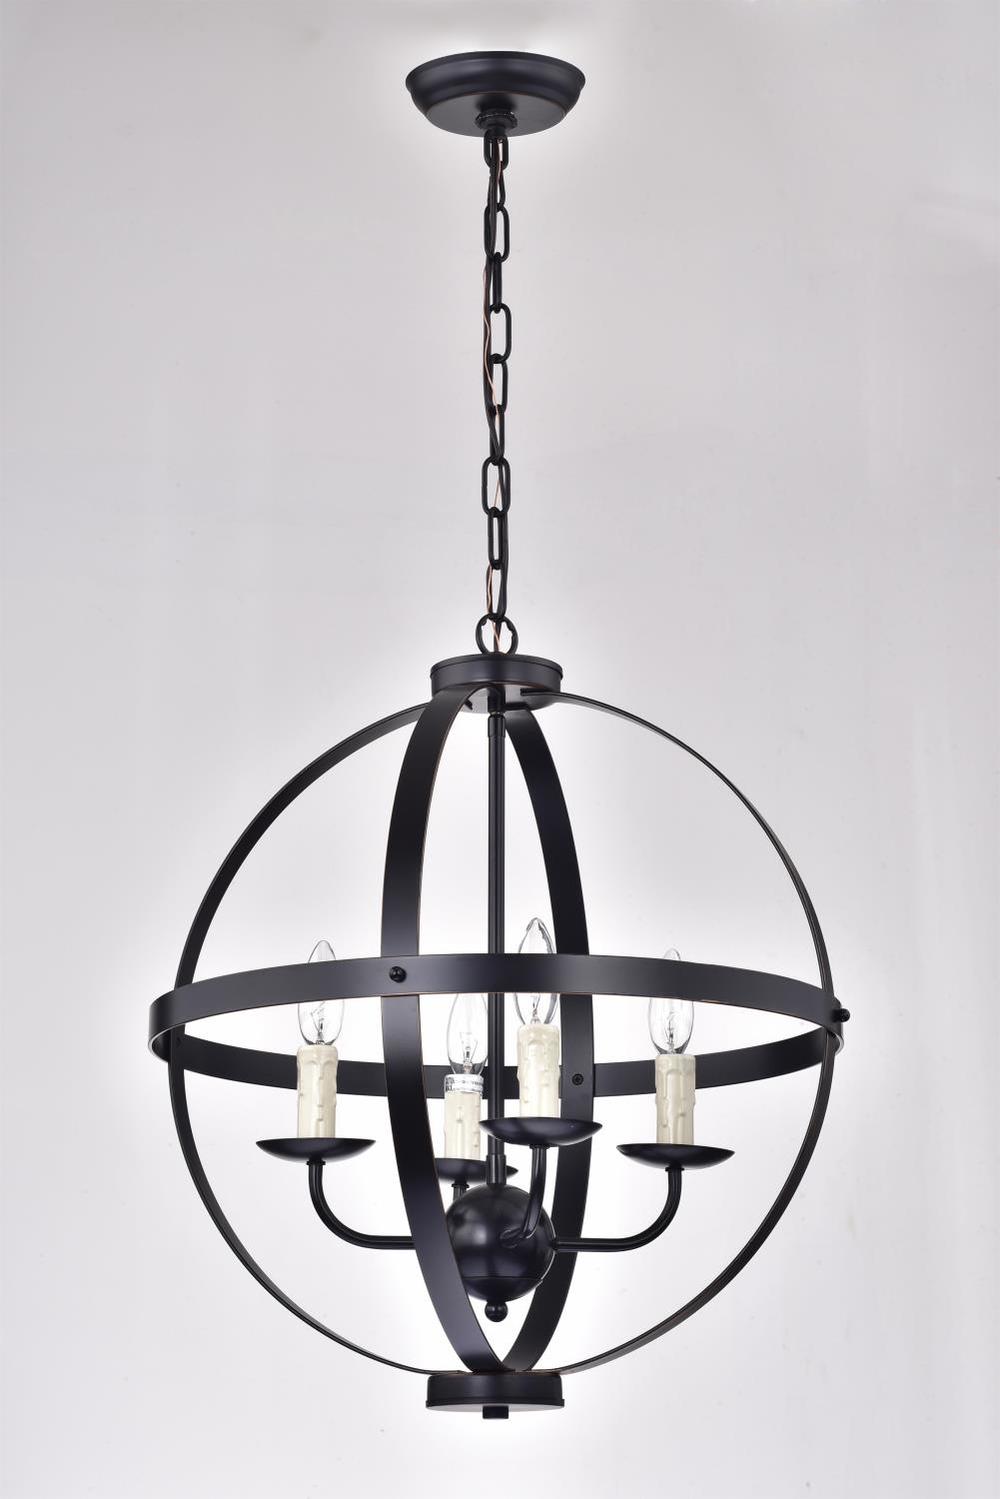 IM Lighting 4-light antique bronze finished indoor decoration modern wrough iron retro pendant lamp